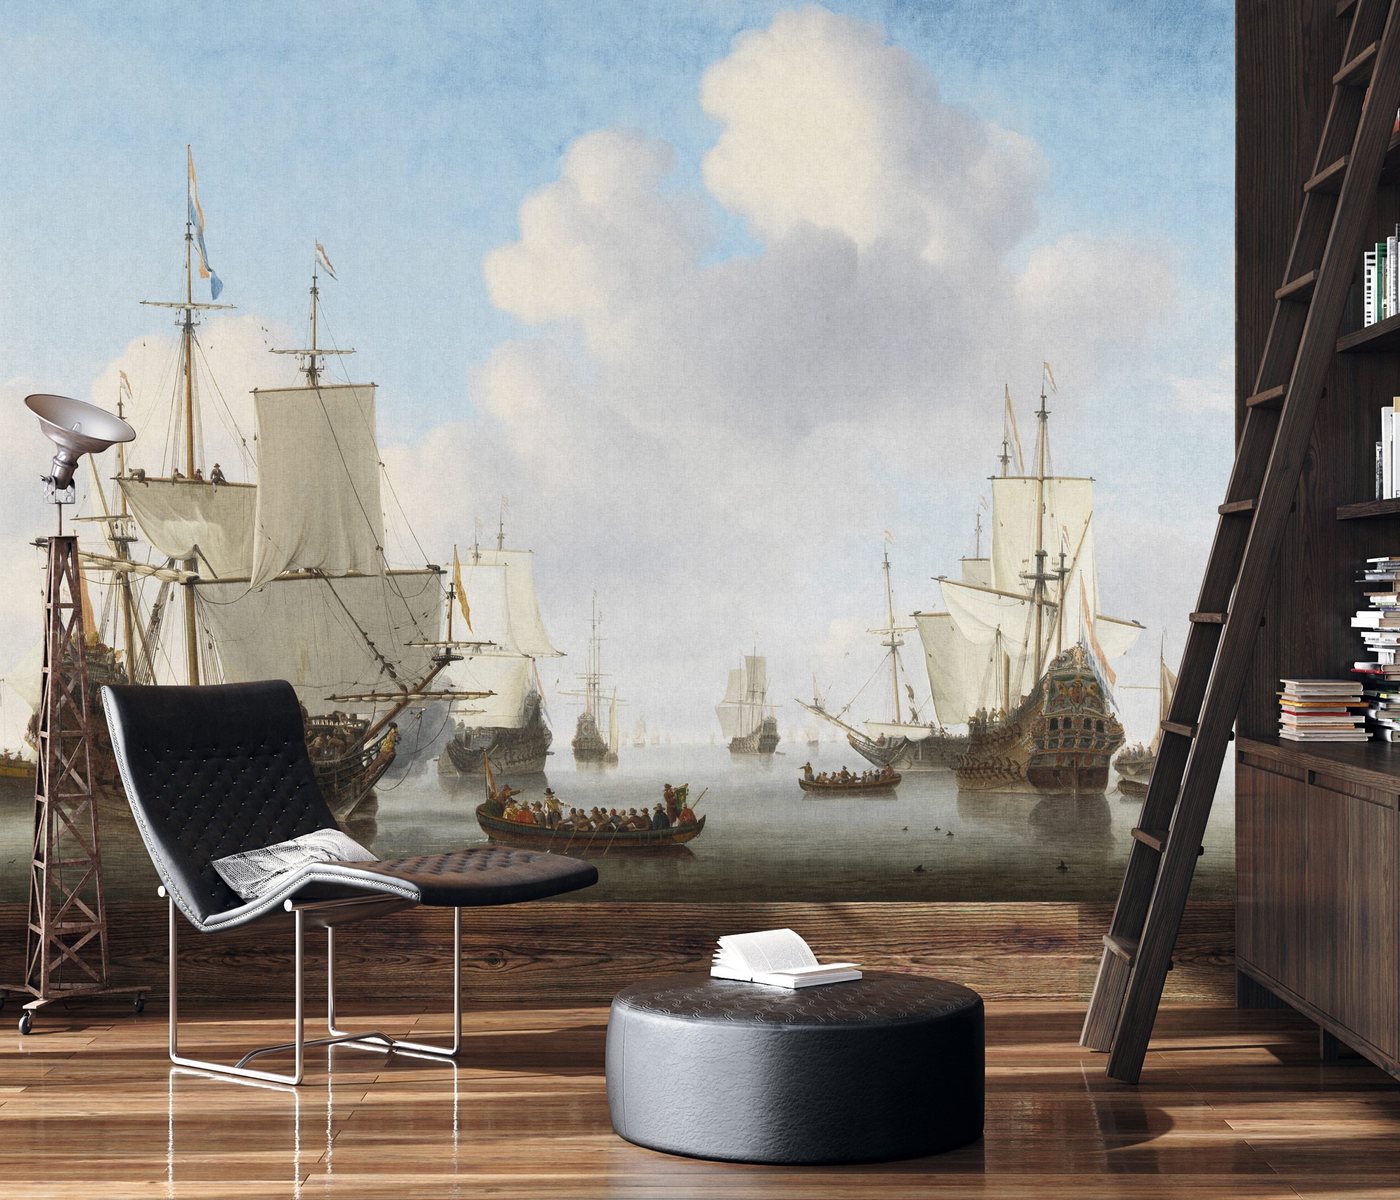 Newroom Vliestapete, [ 4 x 2,7 m ] großzügiges Motiv - kein wiederkehrendes Muster - Fototapete Wandbild Segelschiffe Meer Boote Made in Germany von Newroom